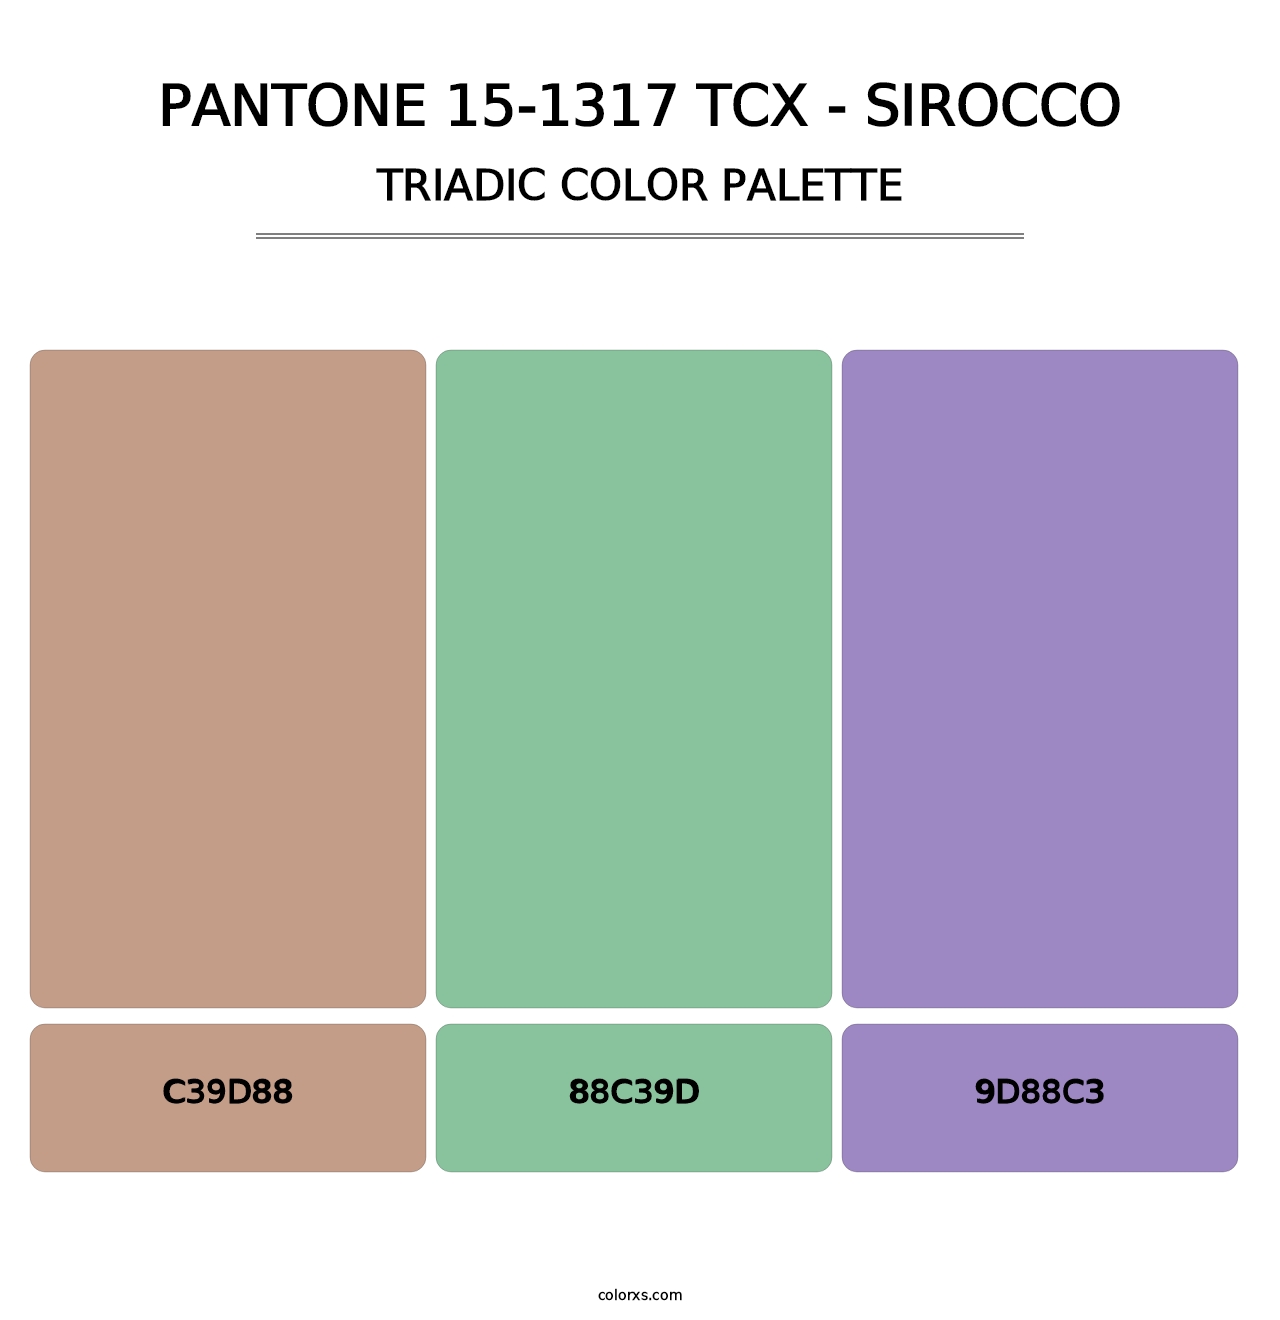 PANTONE 15-1317 TCX - Sirocco - Triadic Color Palette